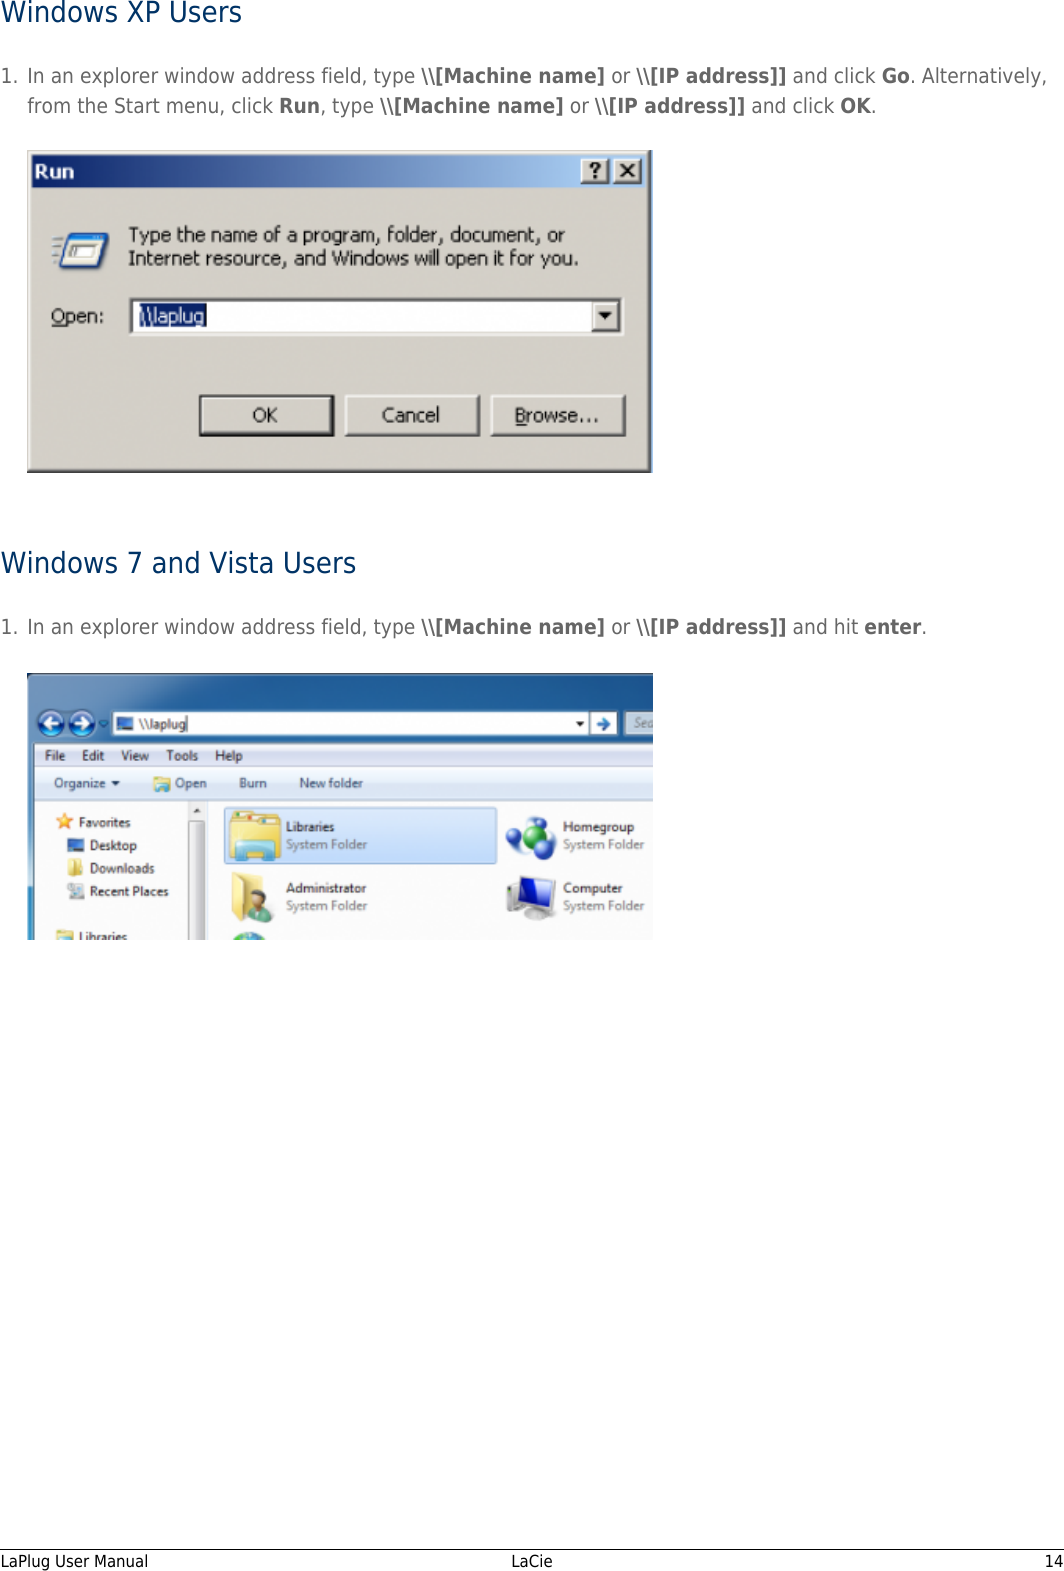 Windows XP UsersIn an explorer window address field, type \\[Machine name] or \\[IP address]] and click Go. Alternatively,1.from the Start menu, click Run, type \\[Machine name] or \\[IP address]] and click OK.Windows 7 and Vista UsersIn an explorer window address field, type \\[Machine name] or \\[IP address]] and hit enter.1.LaPlug User Manual   LaCie   14